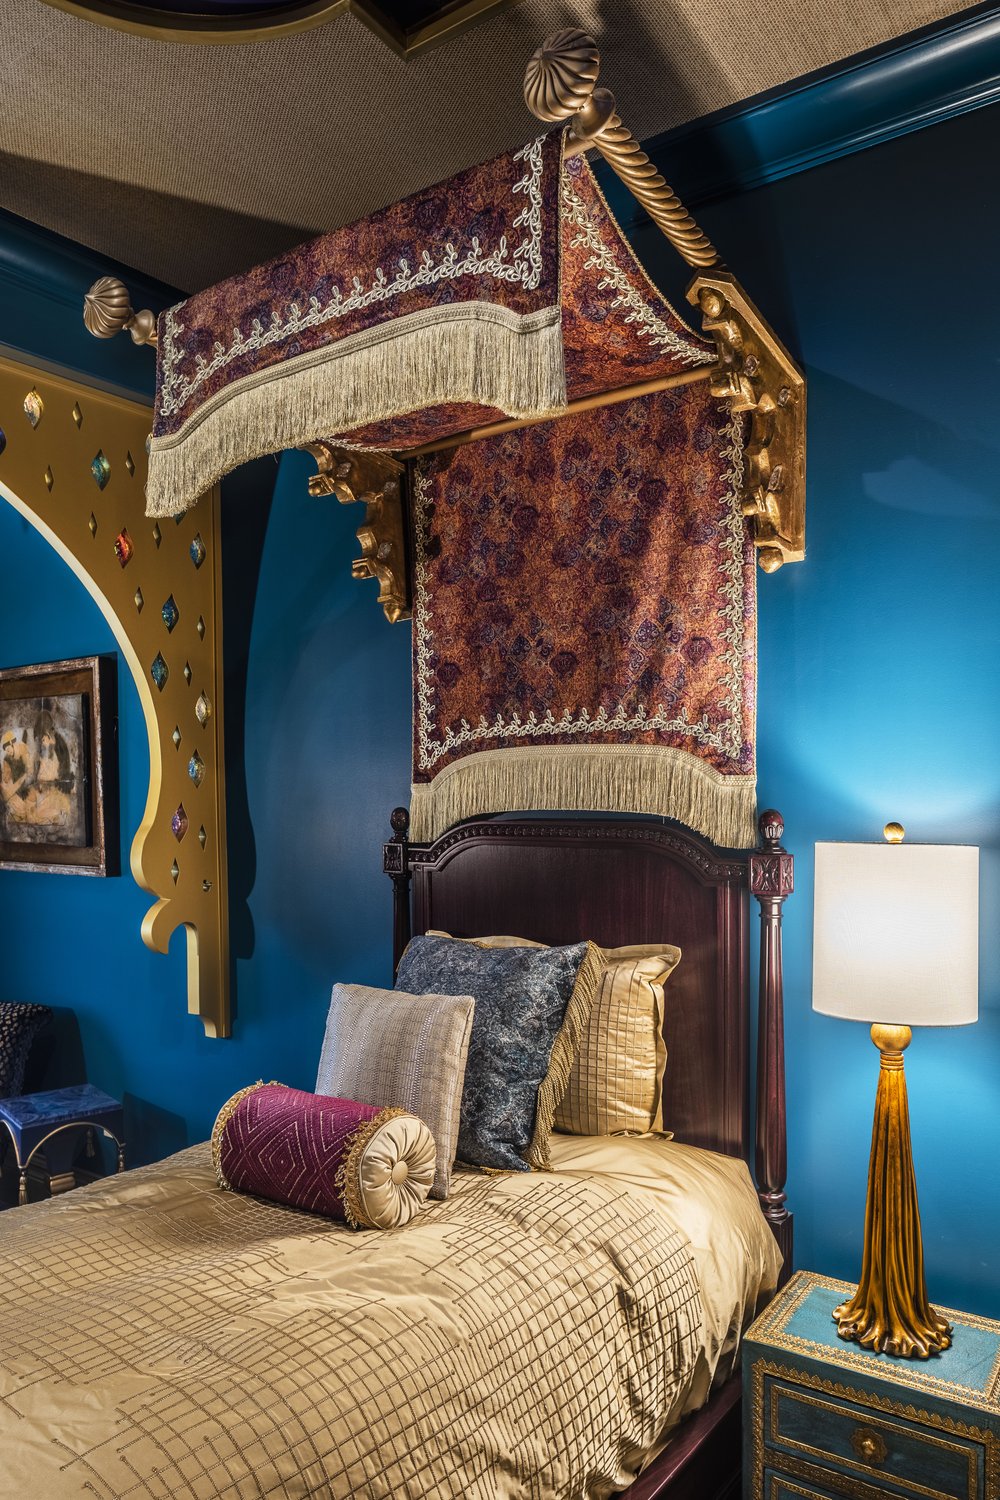 Castle Themed Bedroom Foam Sculpted Decor - Tom Spina Designs » Tom Spina  Designs